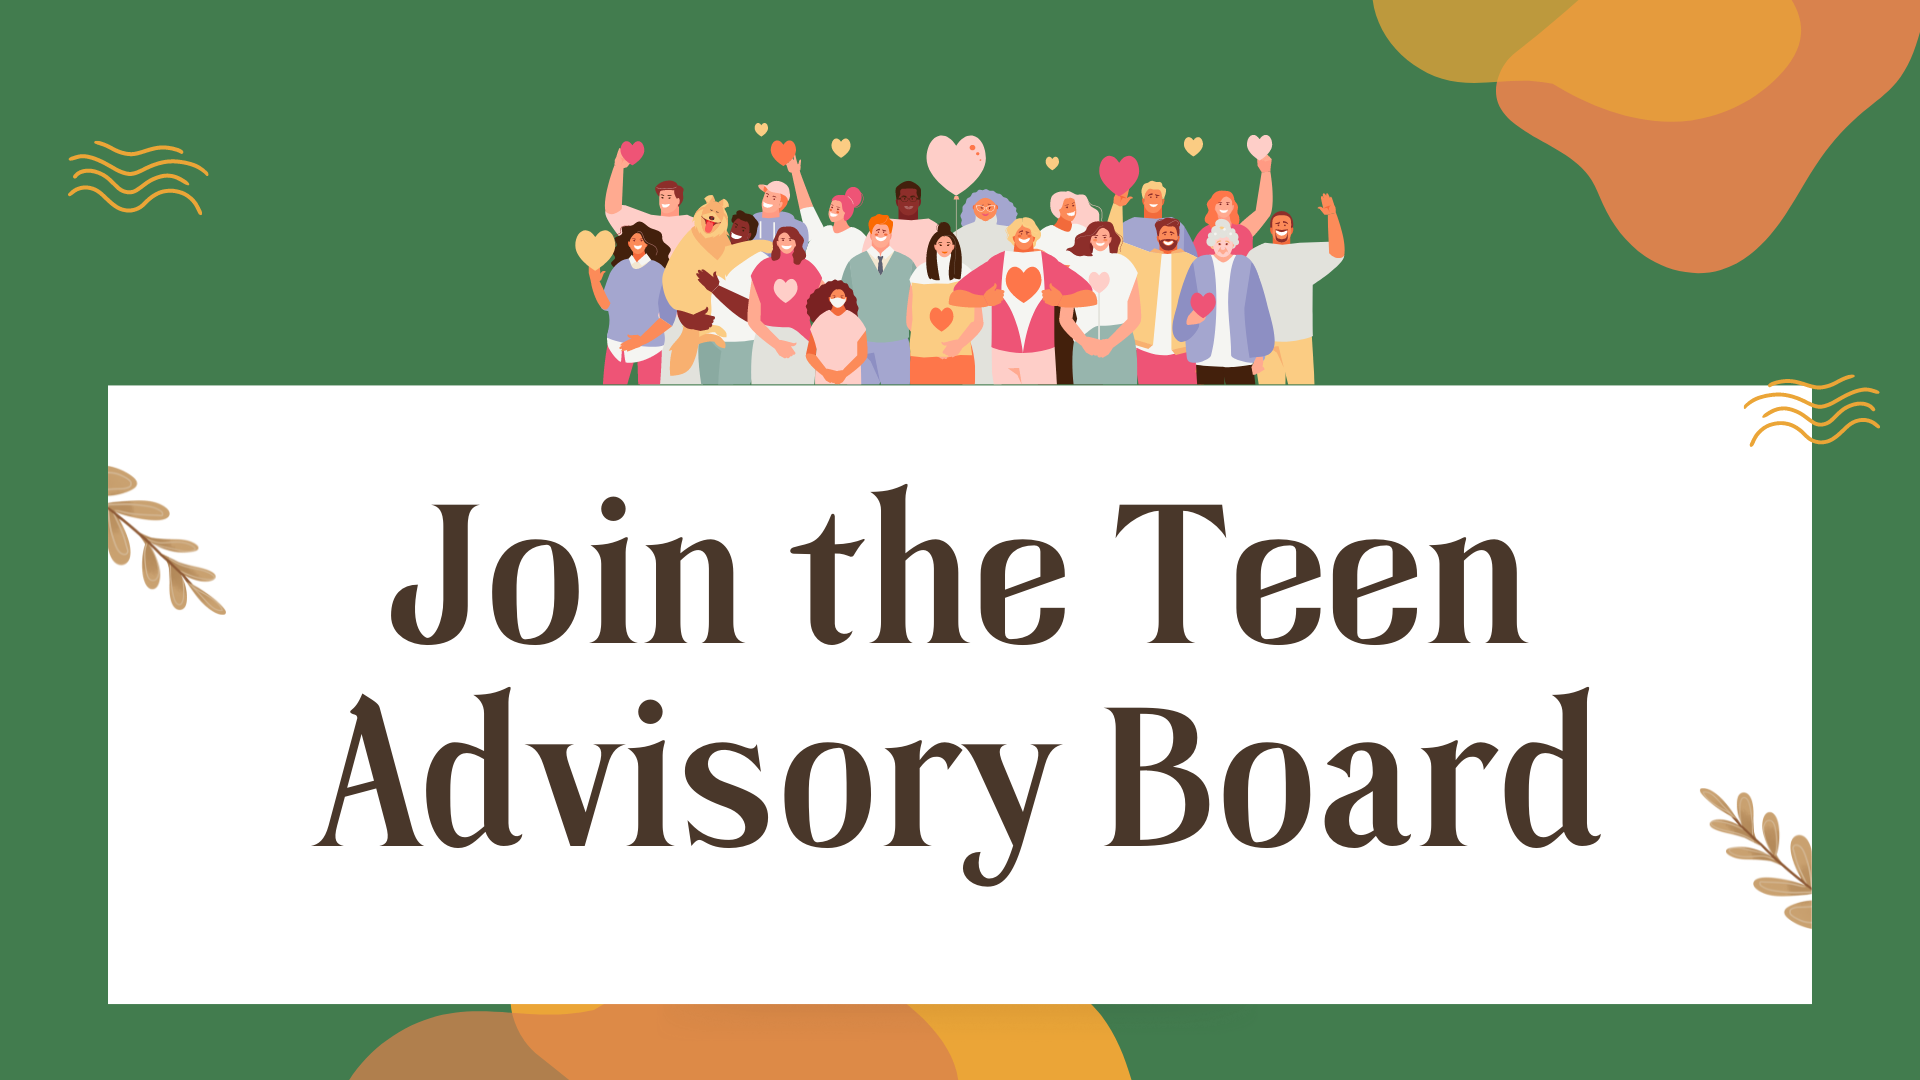 Join the Teen Advisory Board flyer